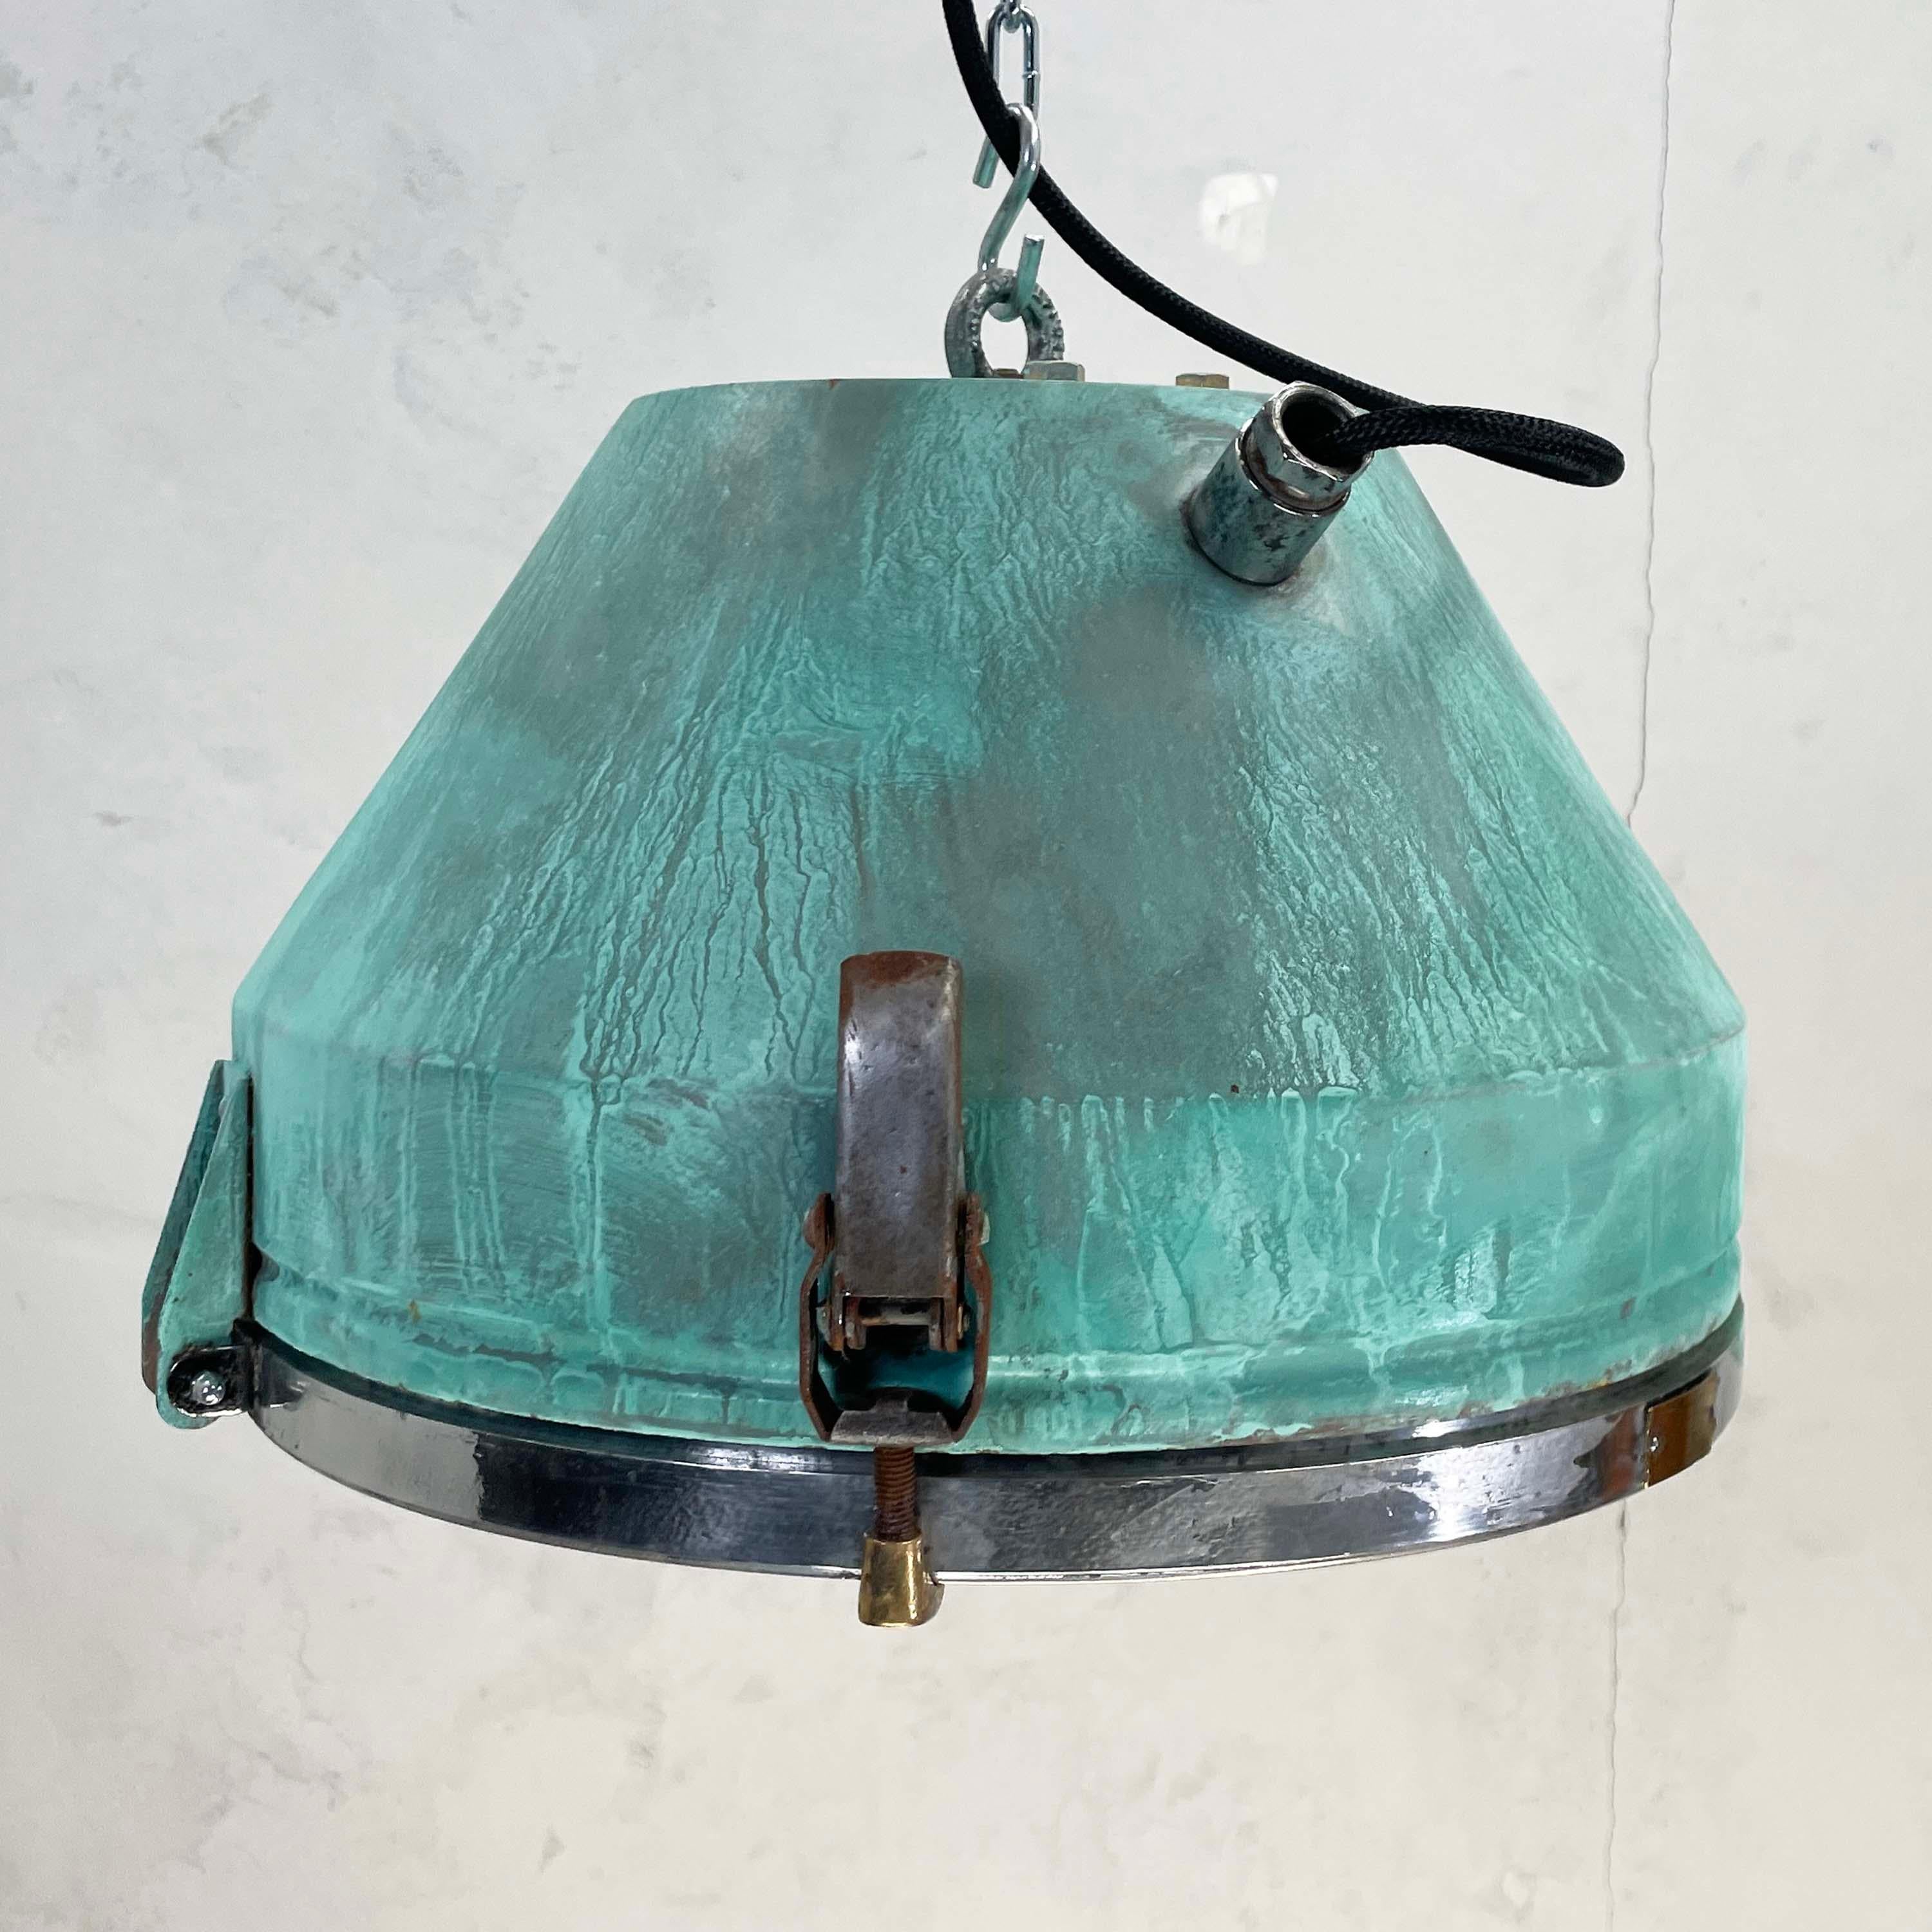 1970's German VEB Steel & Copper Verdigris Industrial Pendant Lamp, Teal Finish For Sale 9